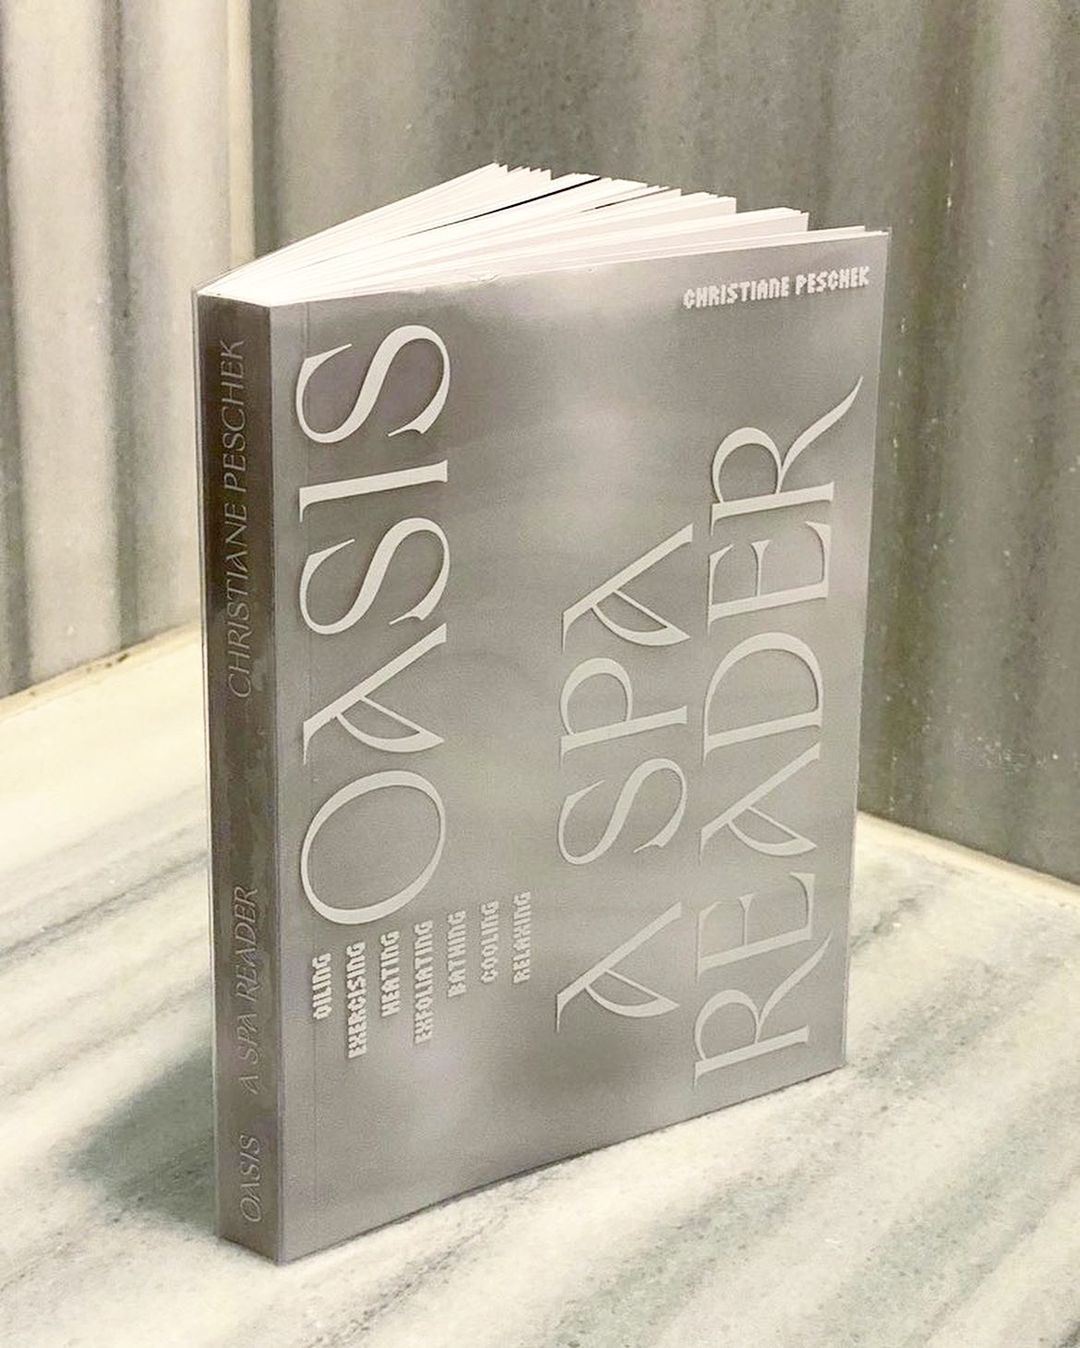 OASIS - A SPA READER by Christiane Peschek